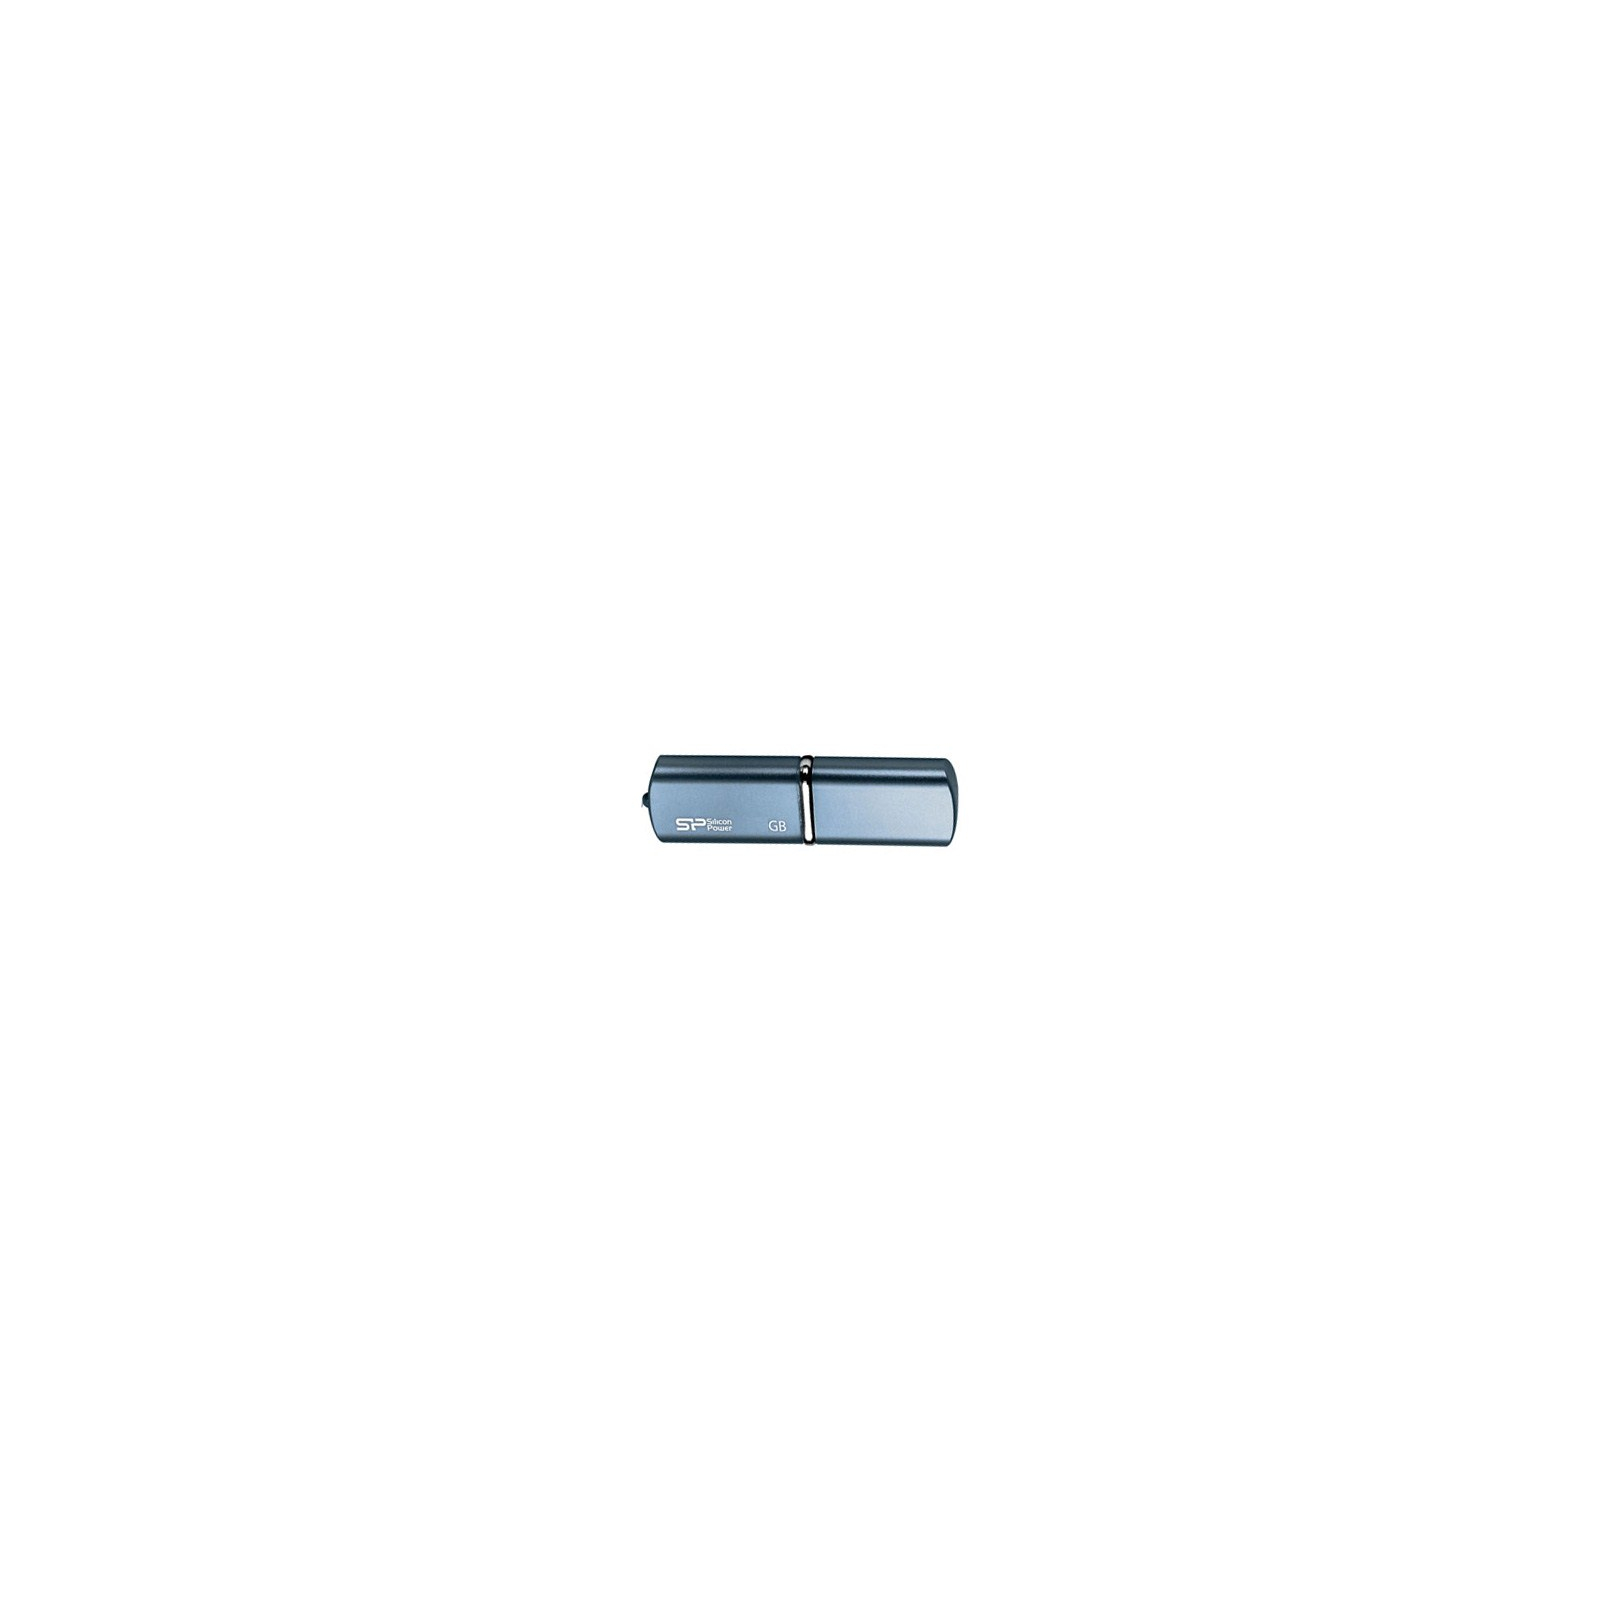 USB флеш накопитель Silicon Power 16Gb LuxMini 720 deep blue (SP016GBUF2720V1D)